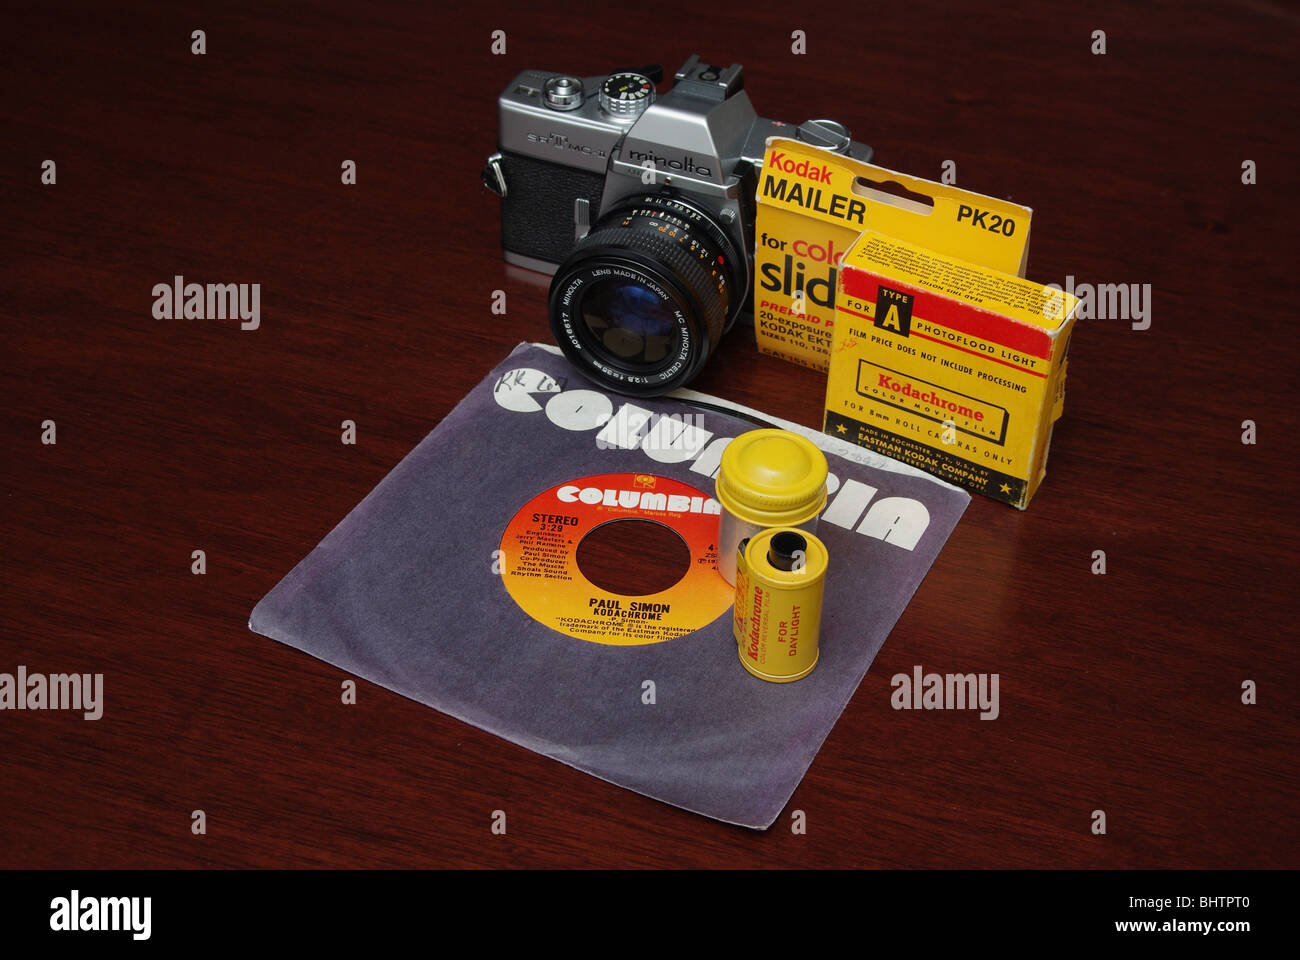 Pellicola Kodachrome, Paul Simon 'Kodachrome' singolo e Minolta SRT telecamera cinematografica Foto Stock